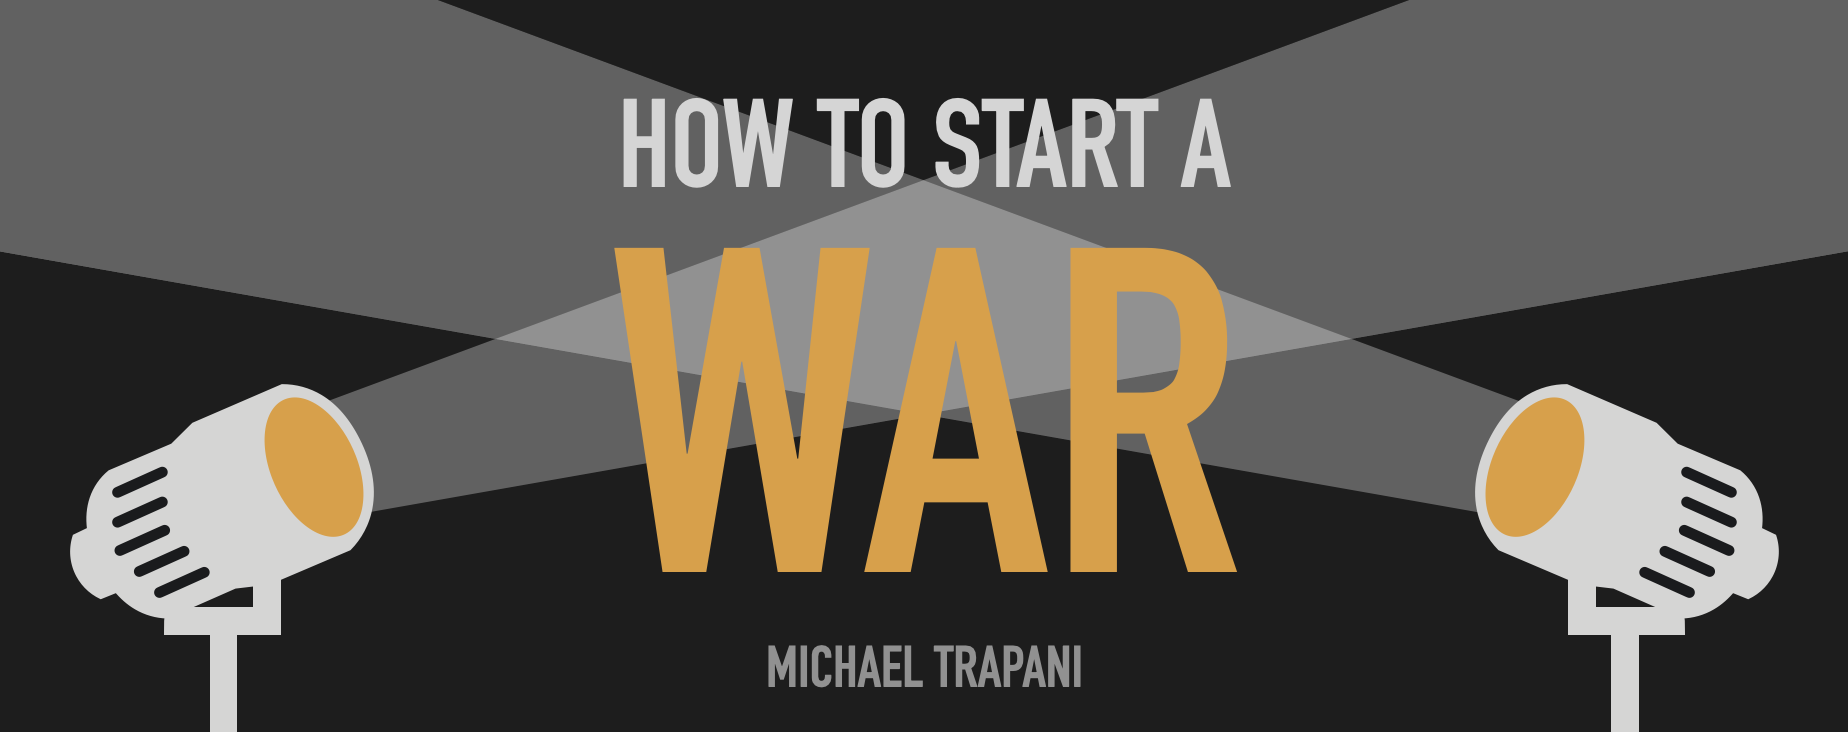 How To Start A War - WW2 Podcast